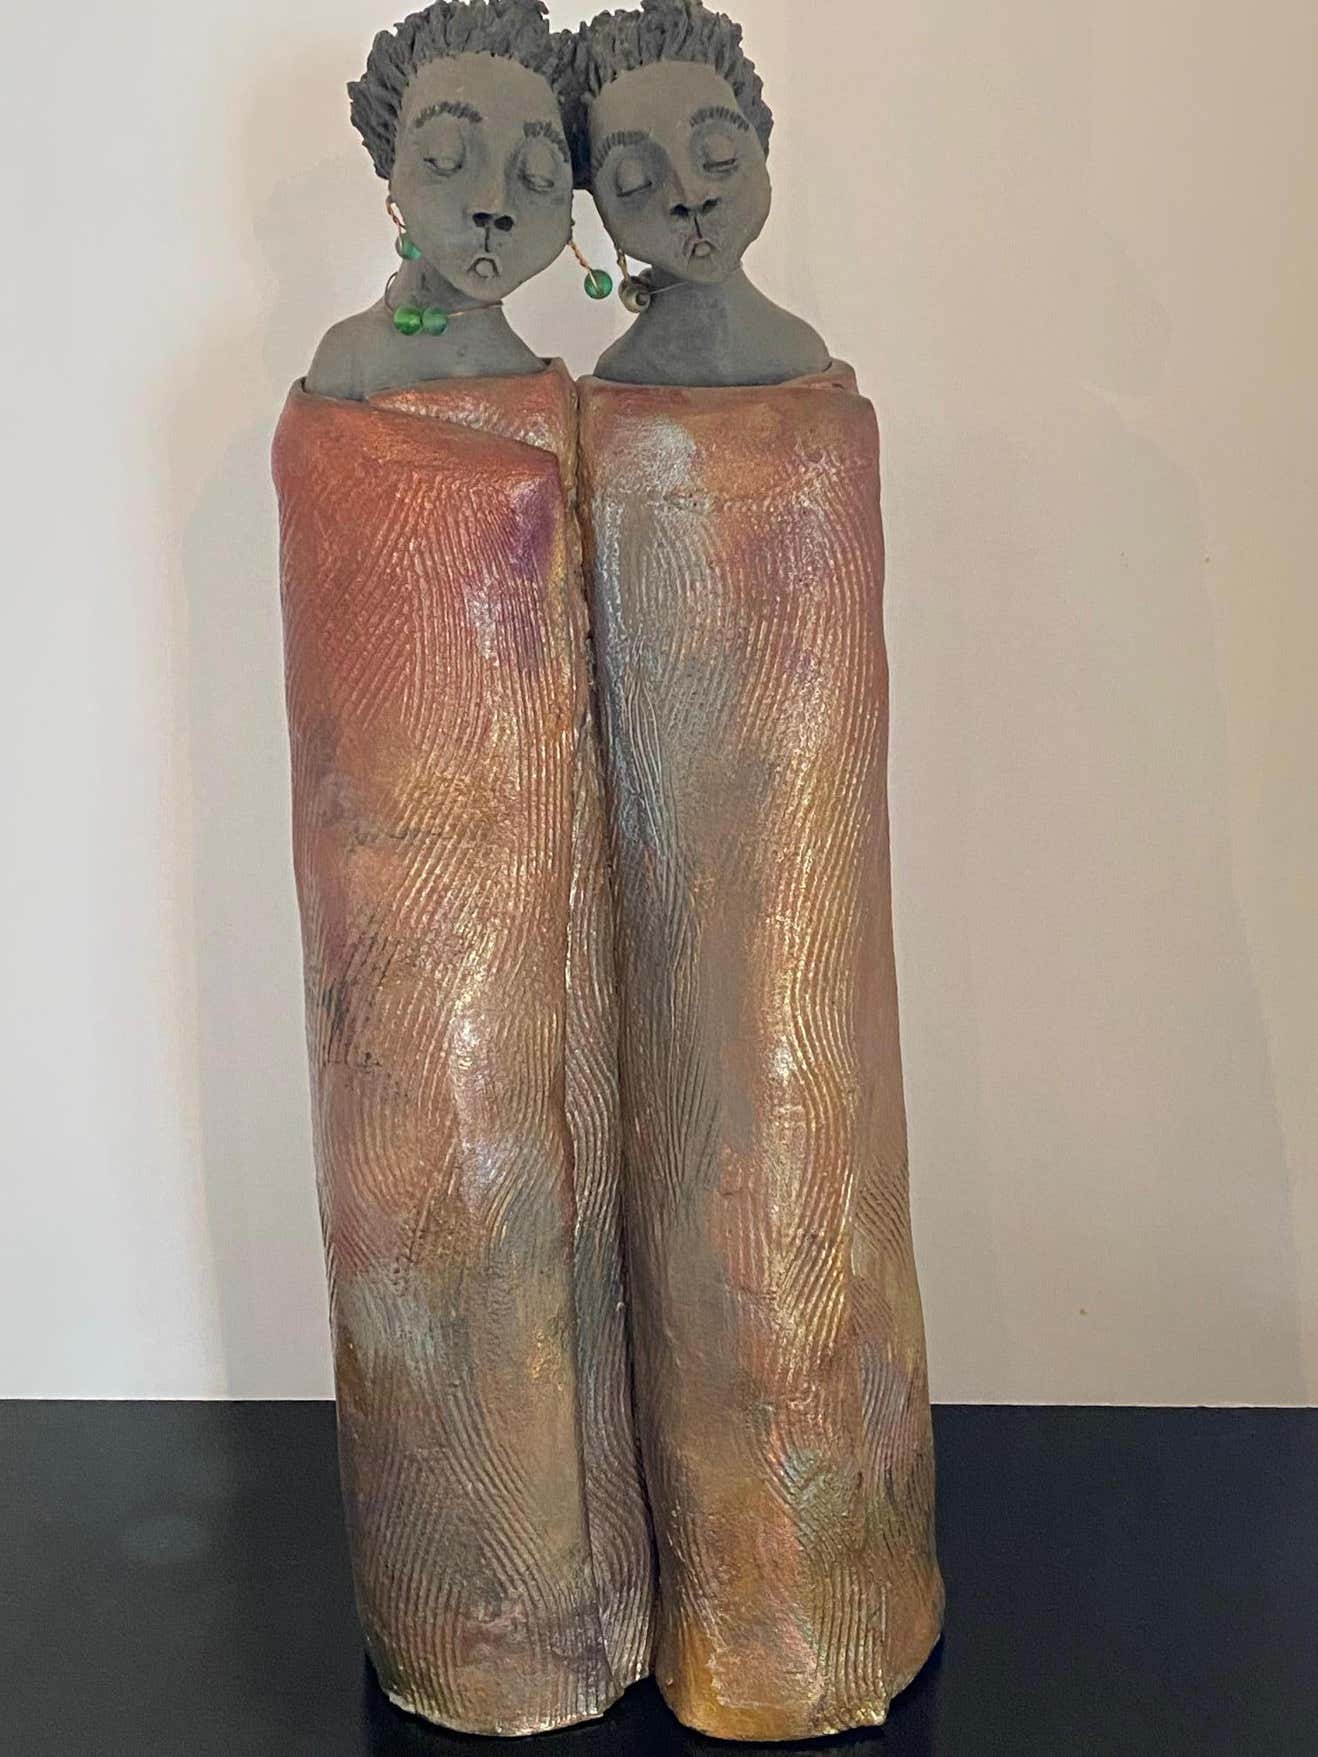 Two Women Ceramic Sculpture